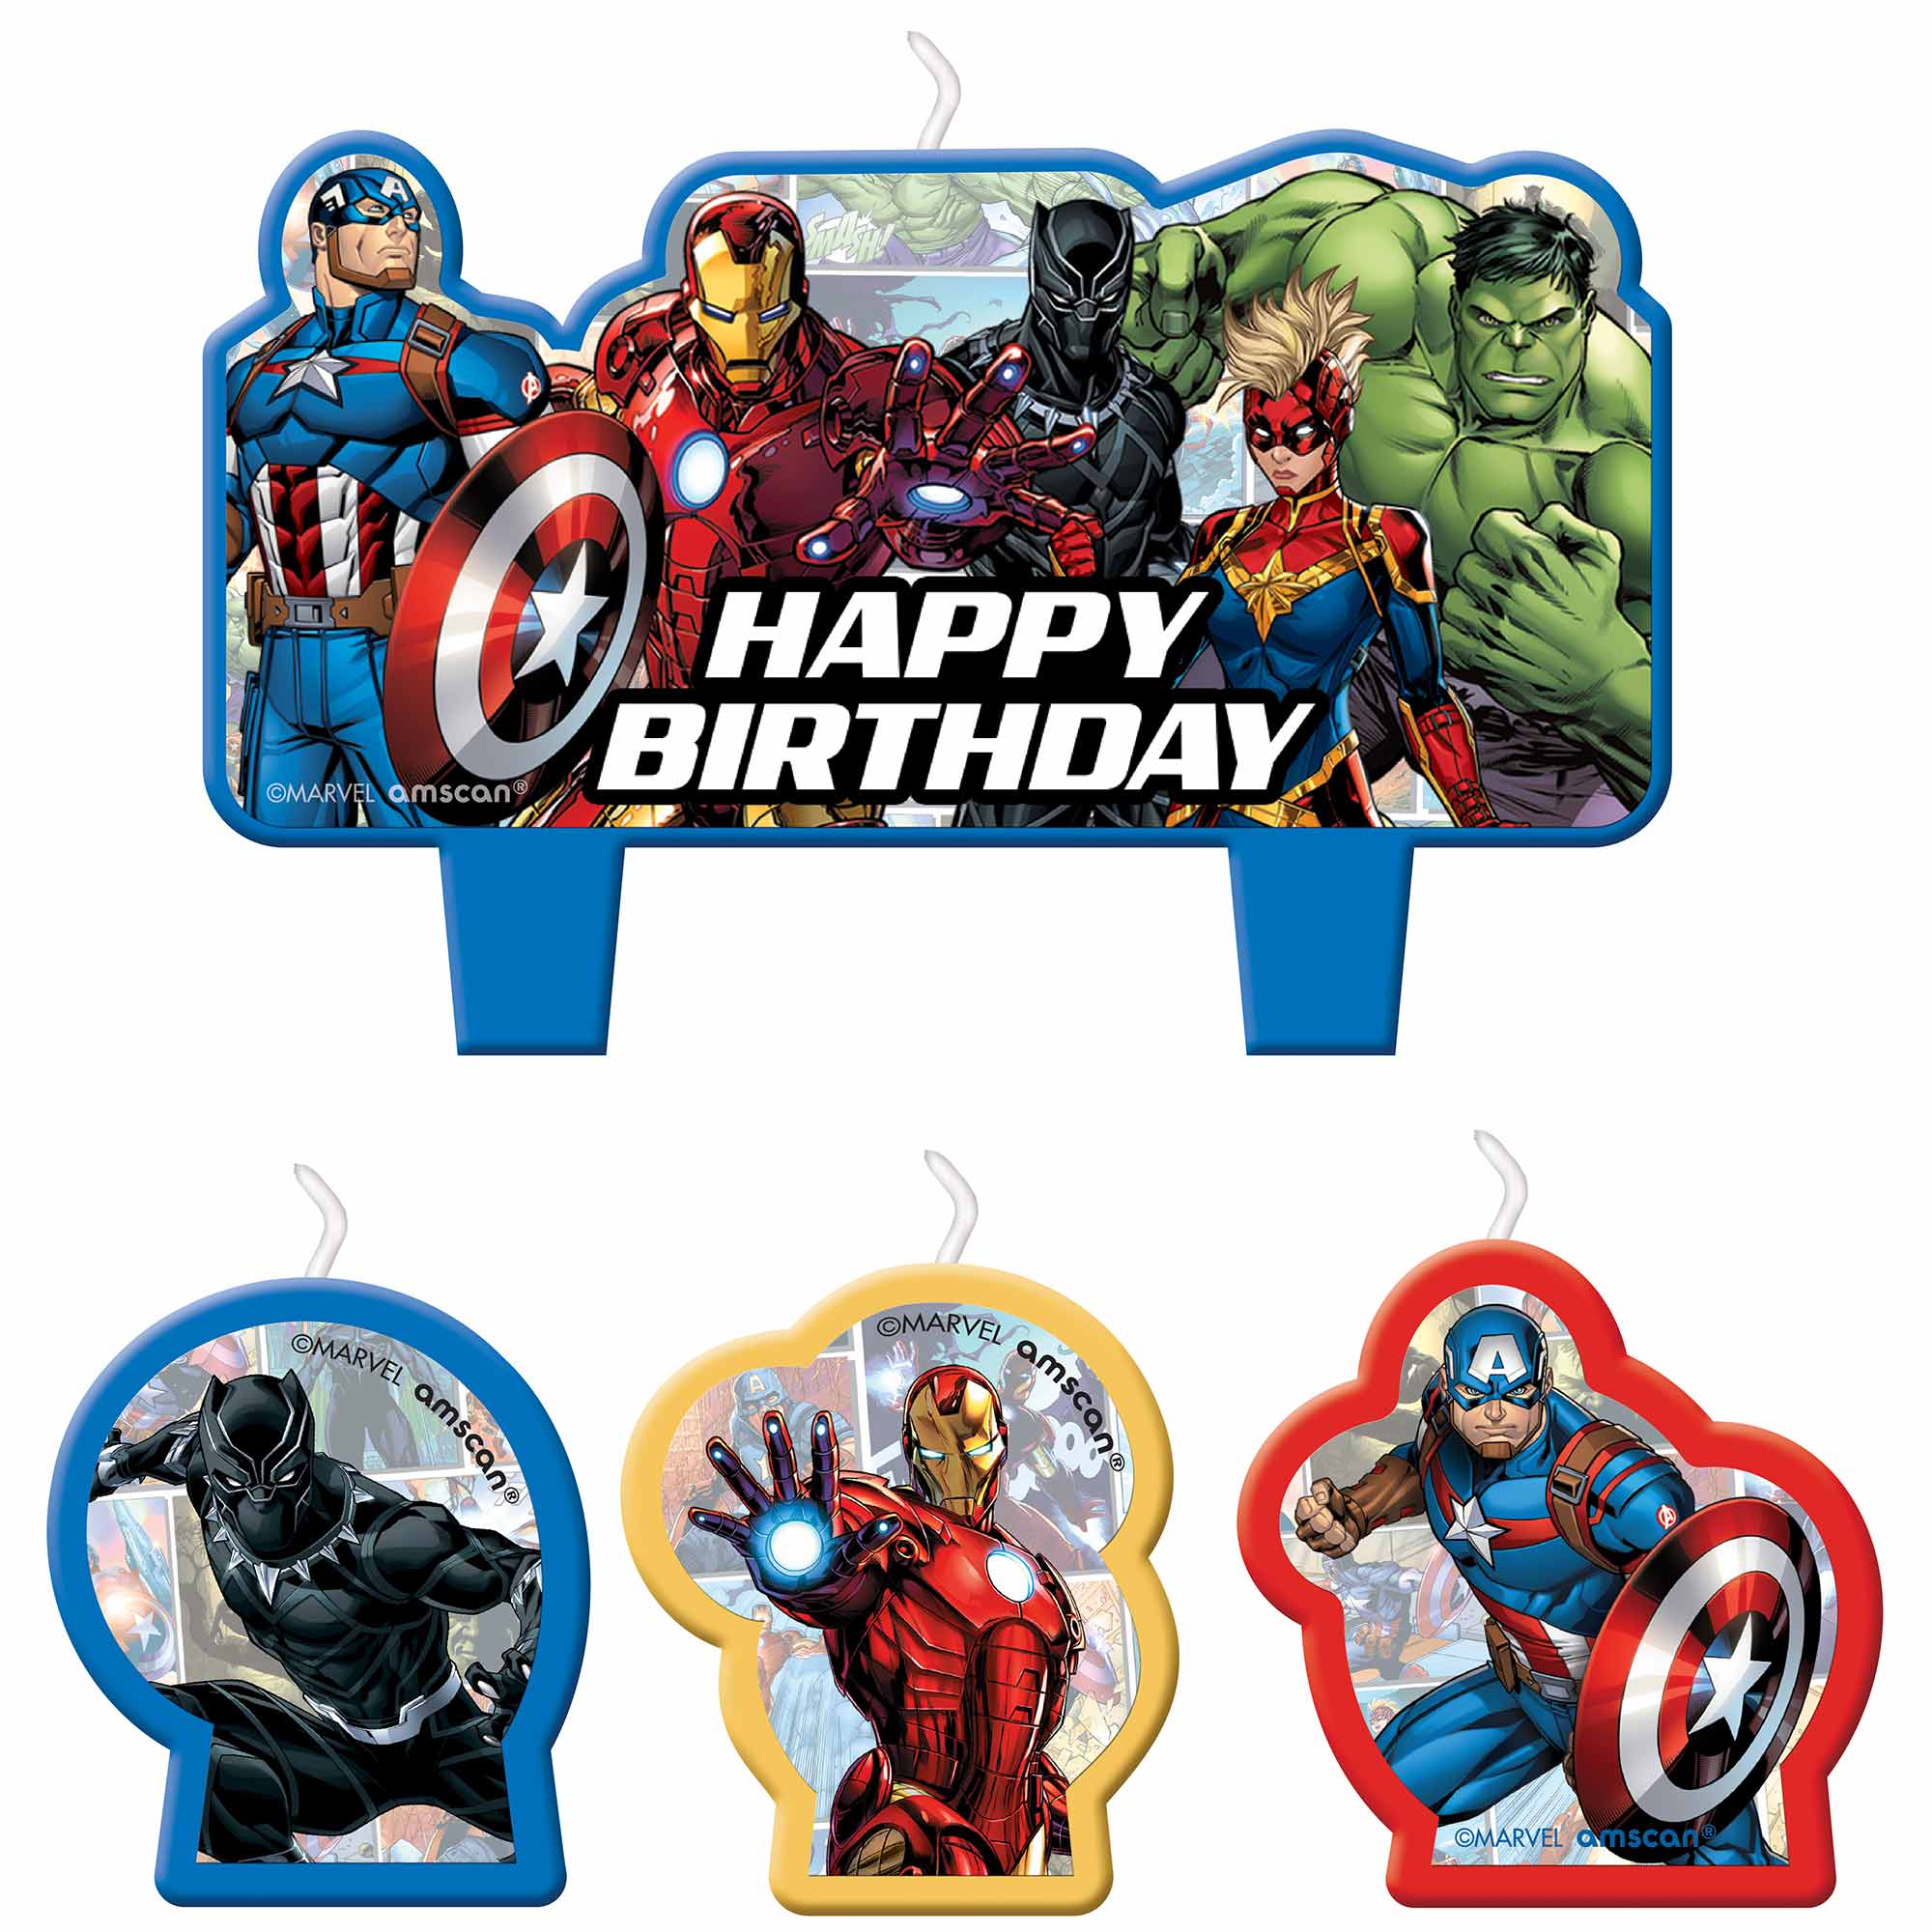 Marvel Avengers Powers Unite Birthday Candle Set - 4 Pack Default Title